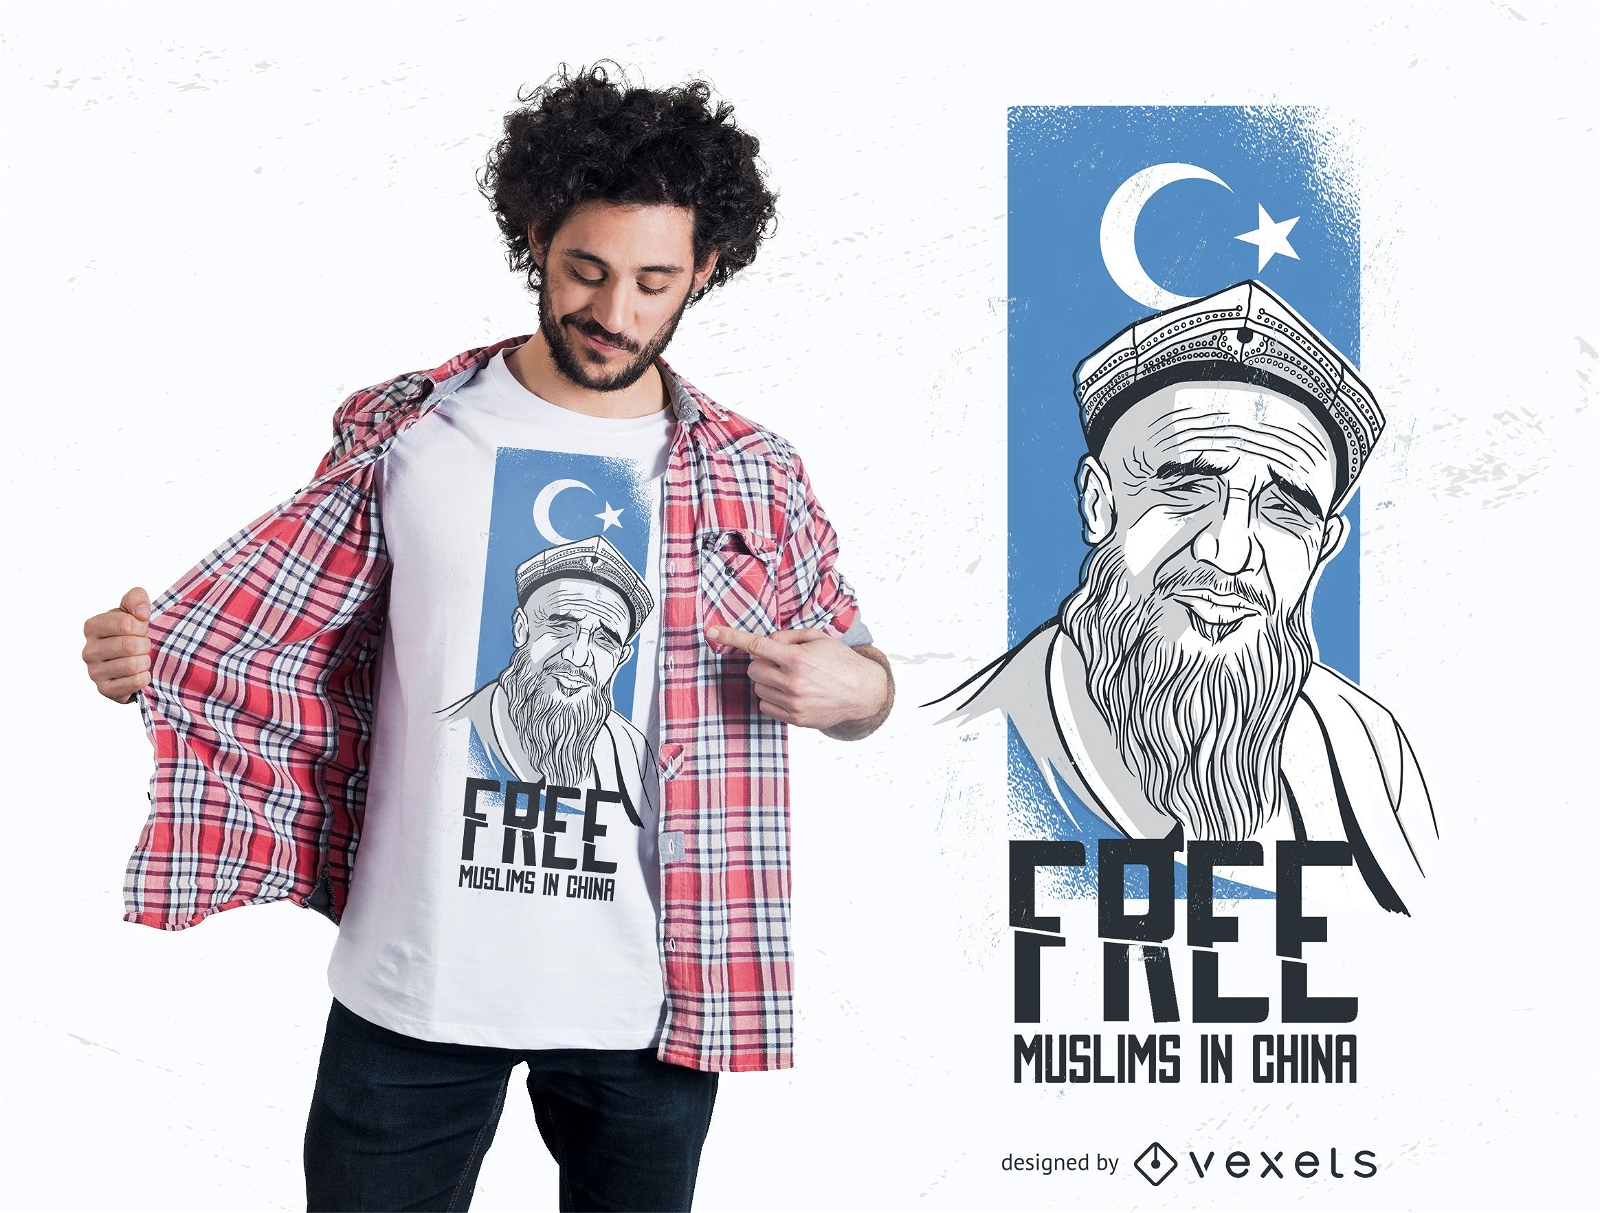 Design gratuito de camisetas muçulmanas